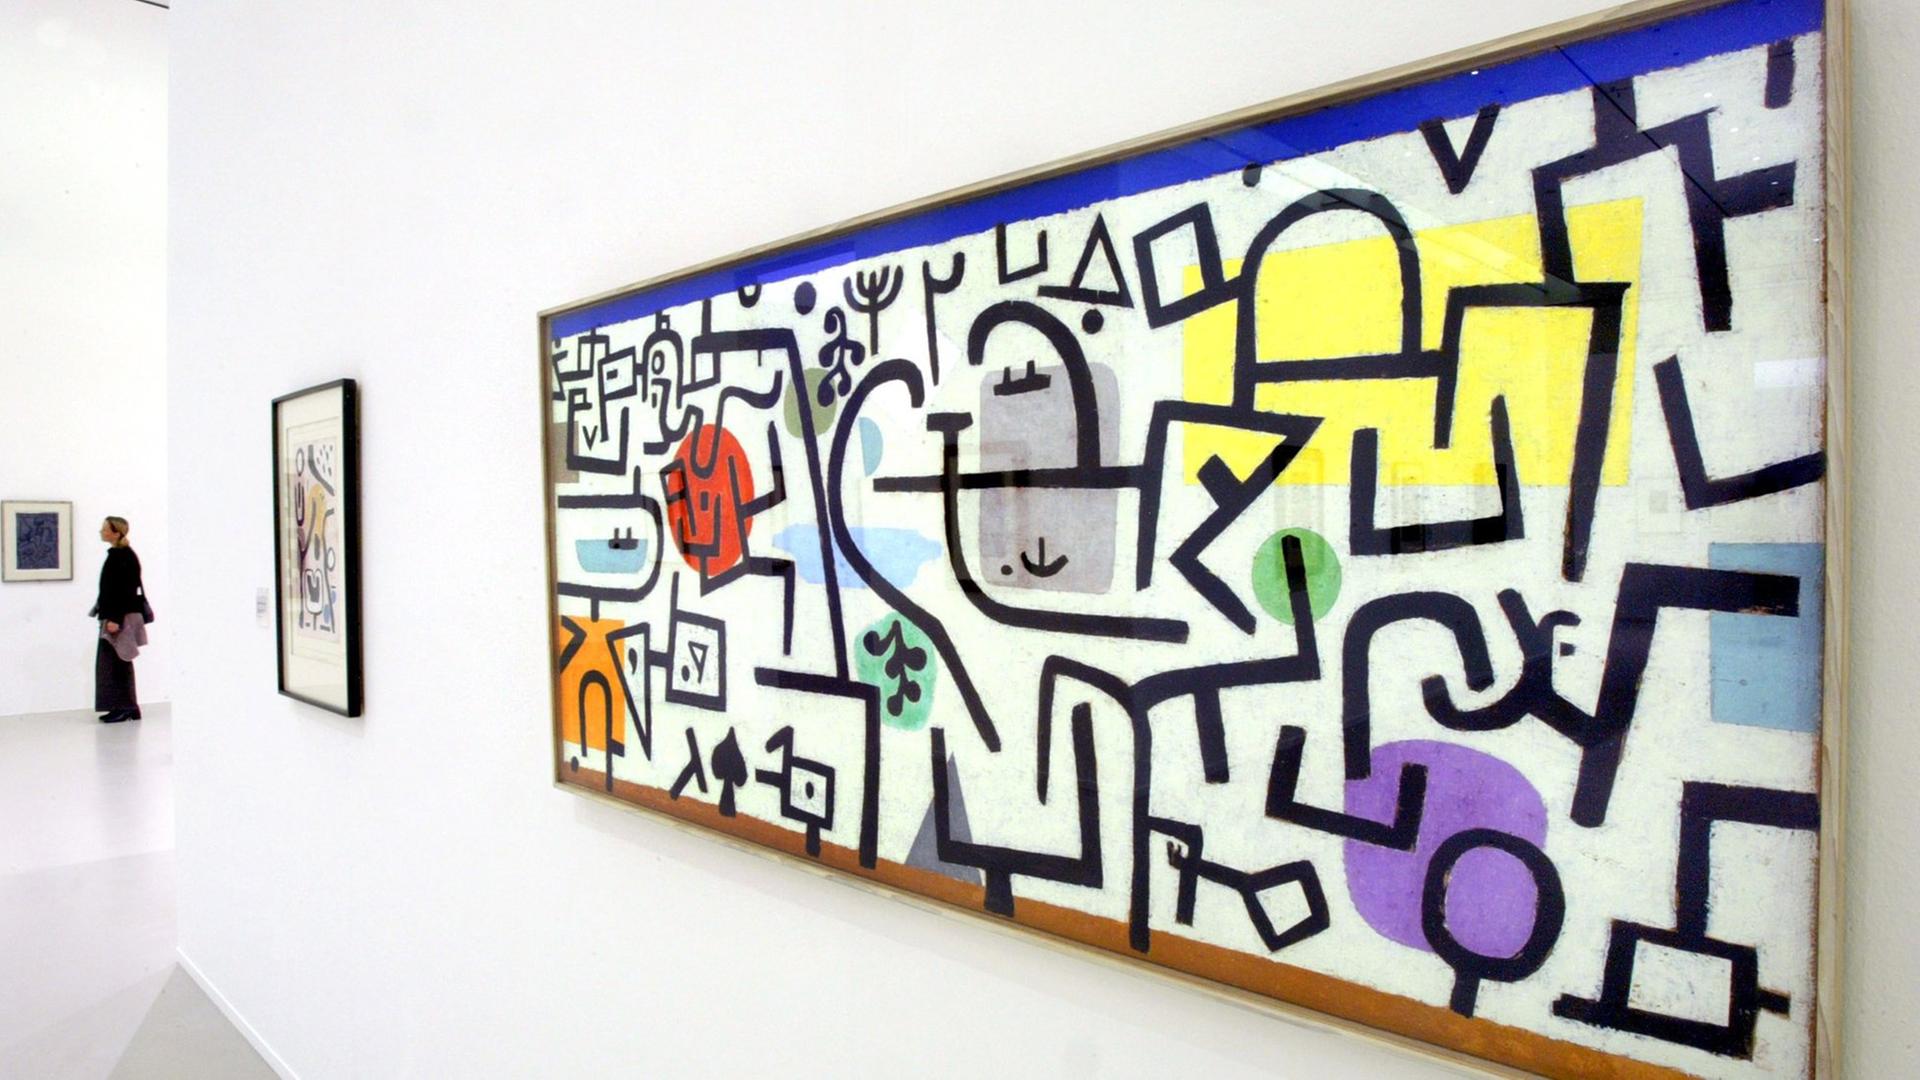 Werke des Malers Paul Klee stehen am 21.11.2003 im Sprengelmuseum Hannover.